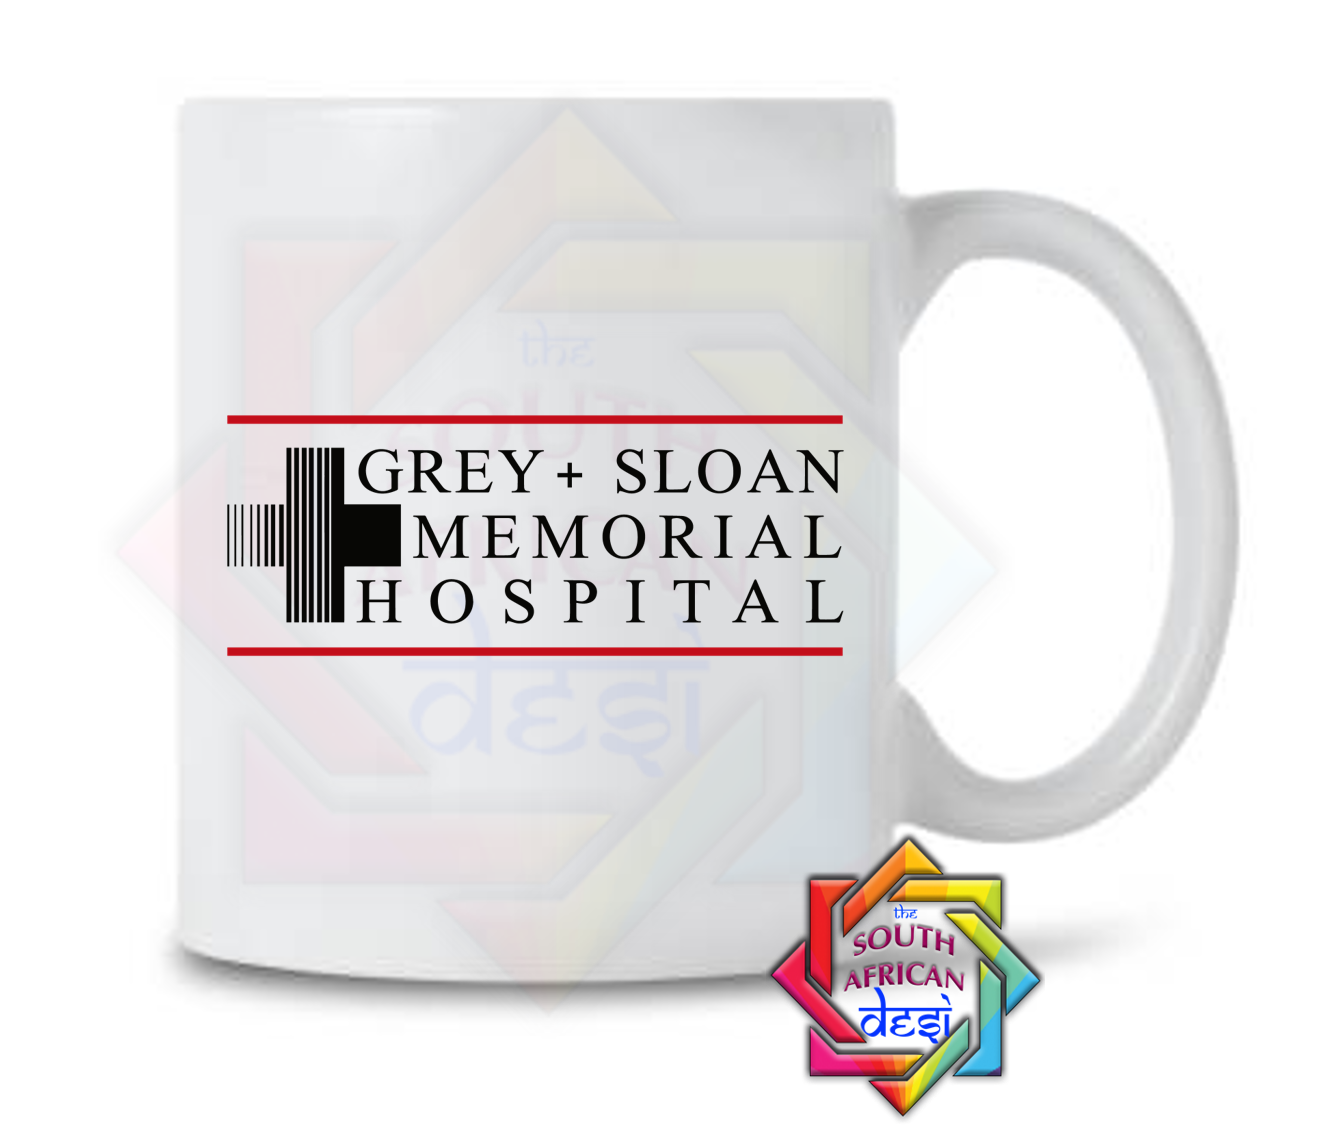 GREY SLOAN MEMORIAL HOSPITAL | GREYS ANATOMY INSPIRED MUG